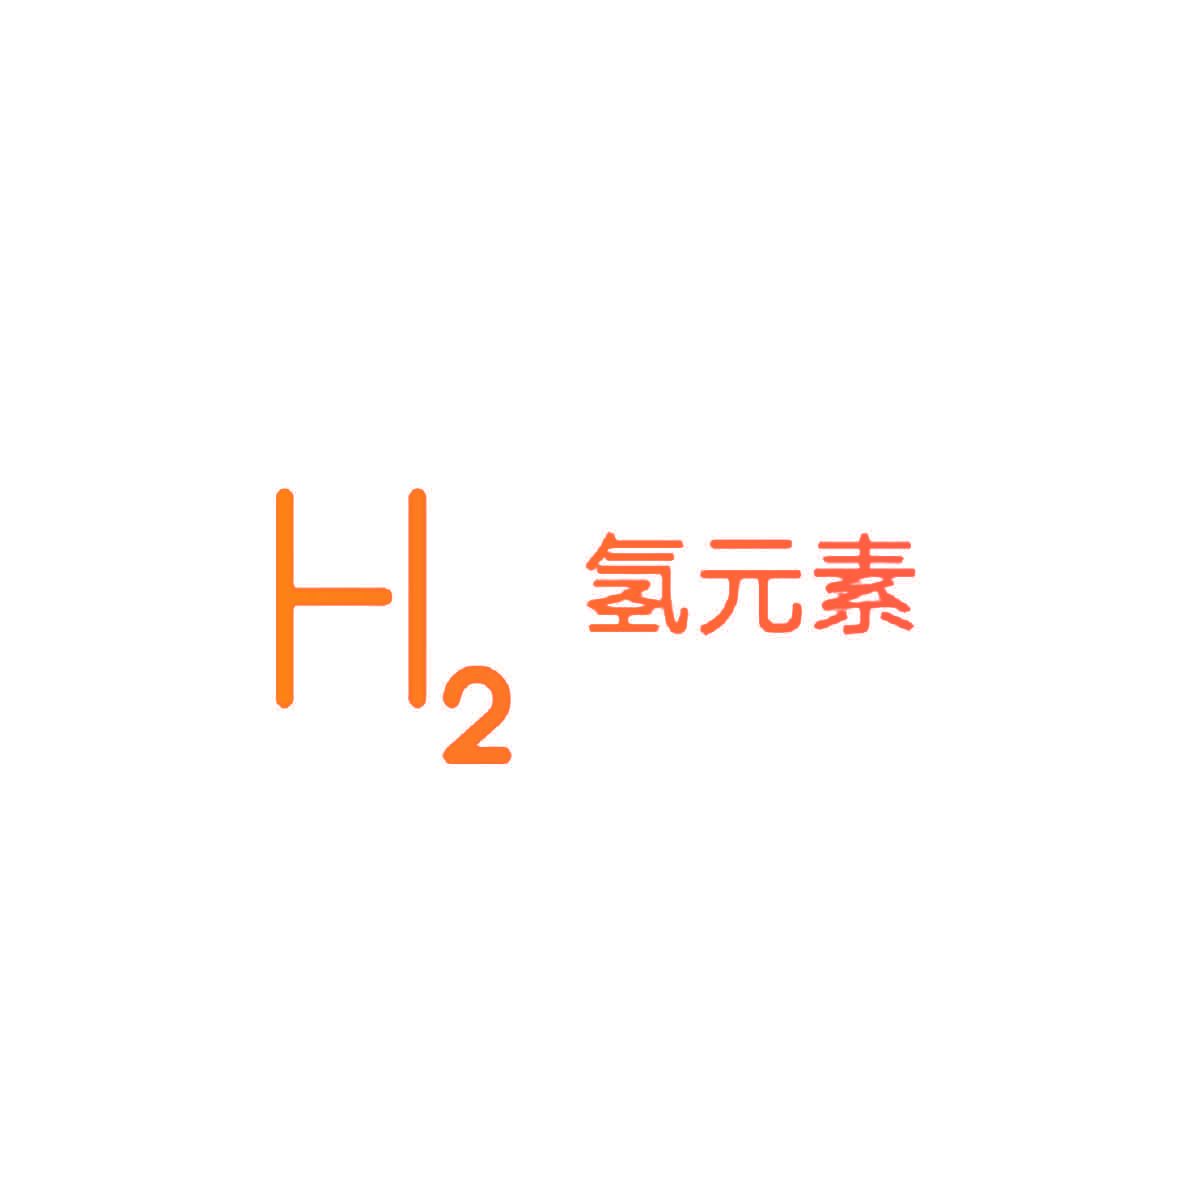 H 2 氢元素